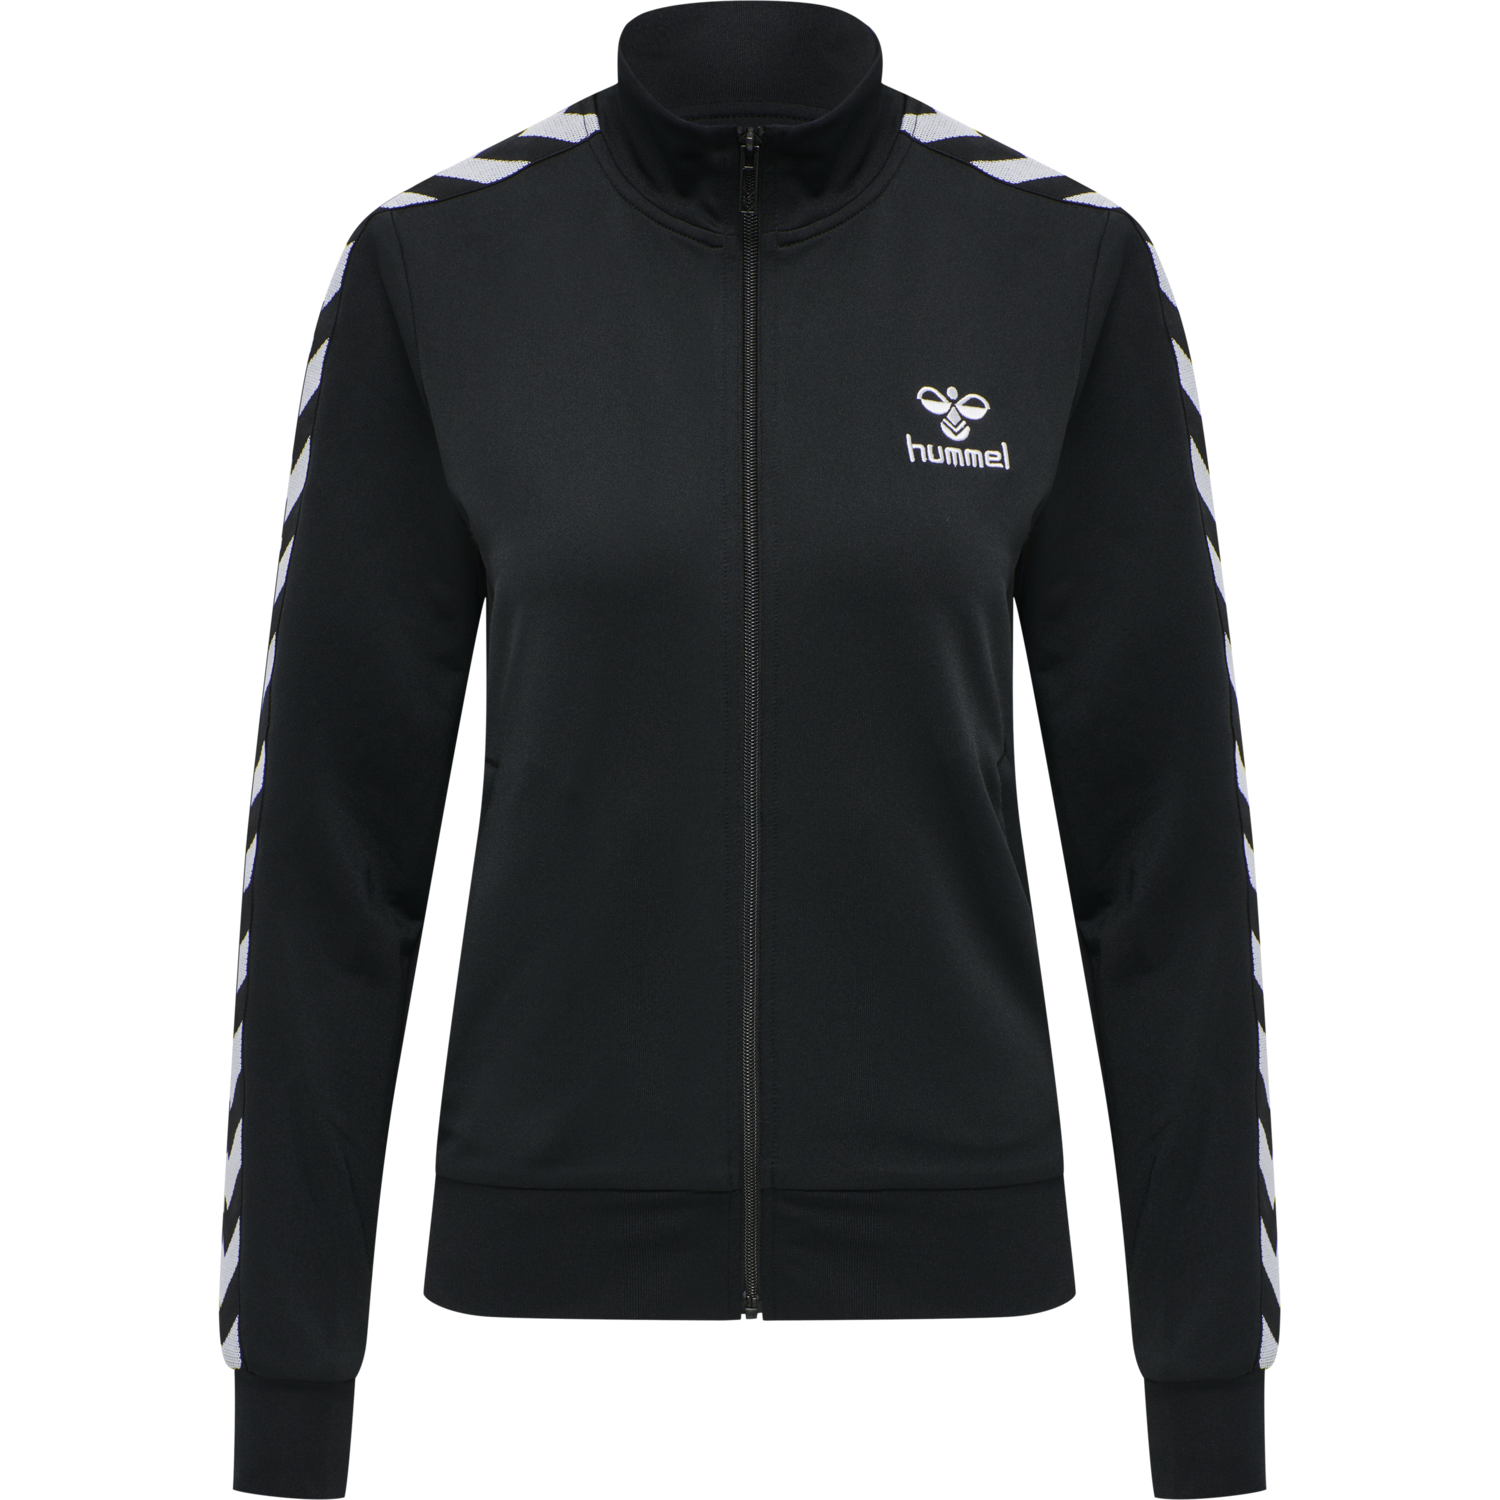 Hummel HMLNelly Zip Jacket Trainingsjacke schwarz Damen NEU 90460 